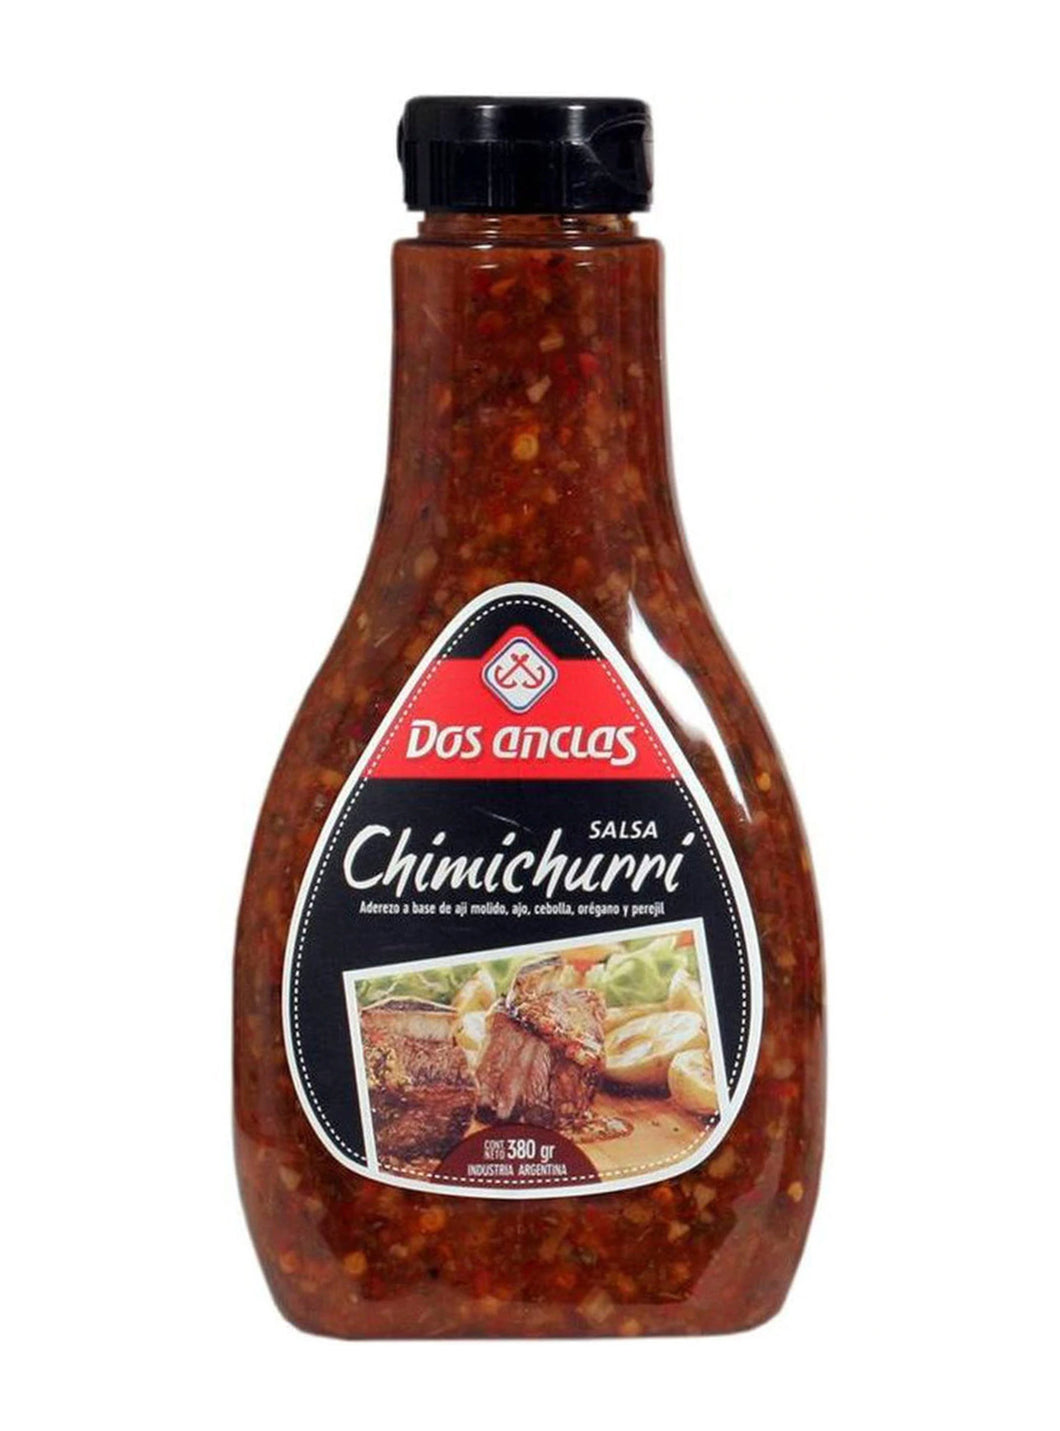 DOS ANCLAS Chimichurri (Argentina BBQ sauce)